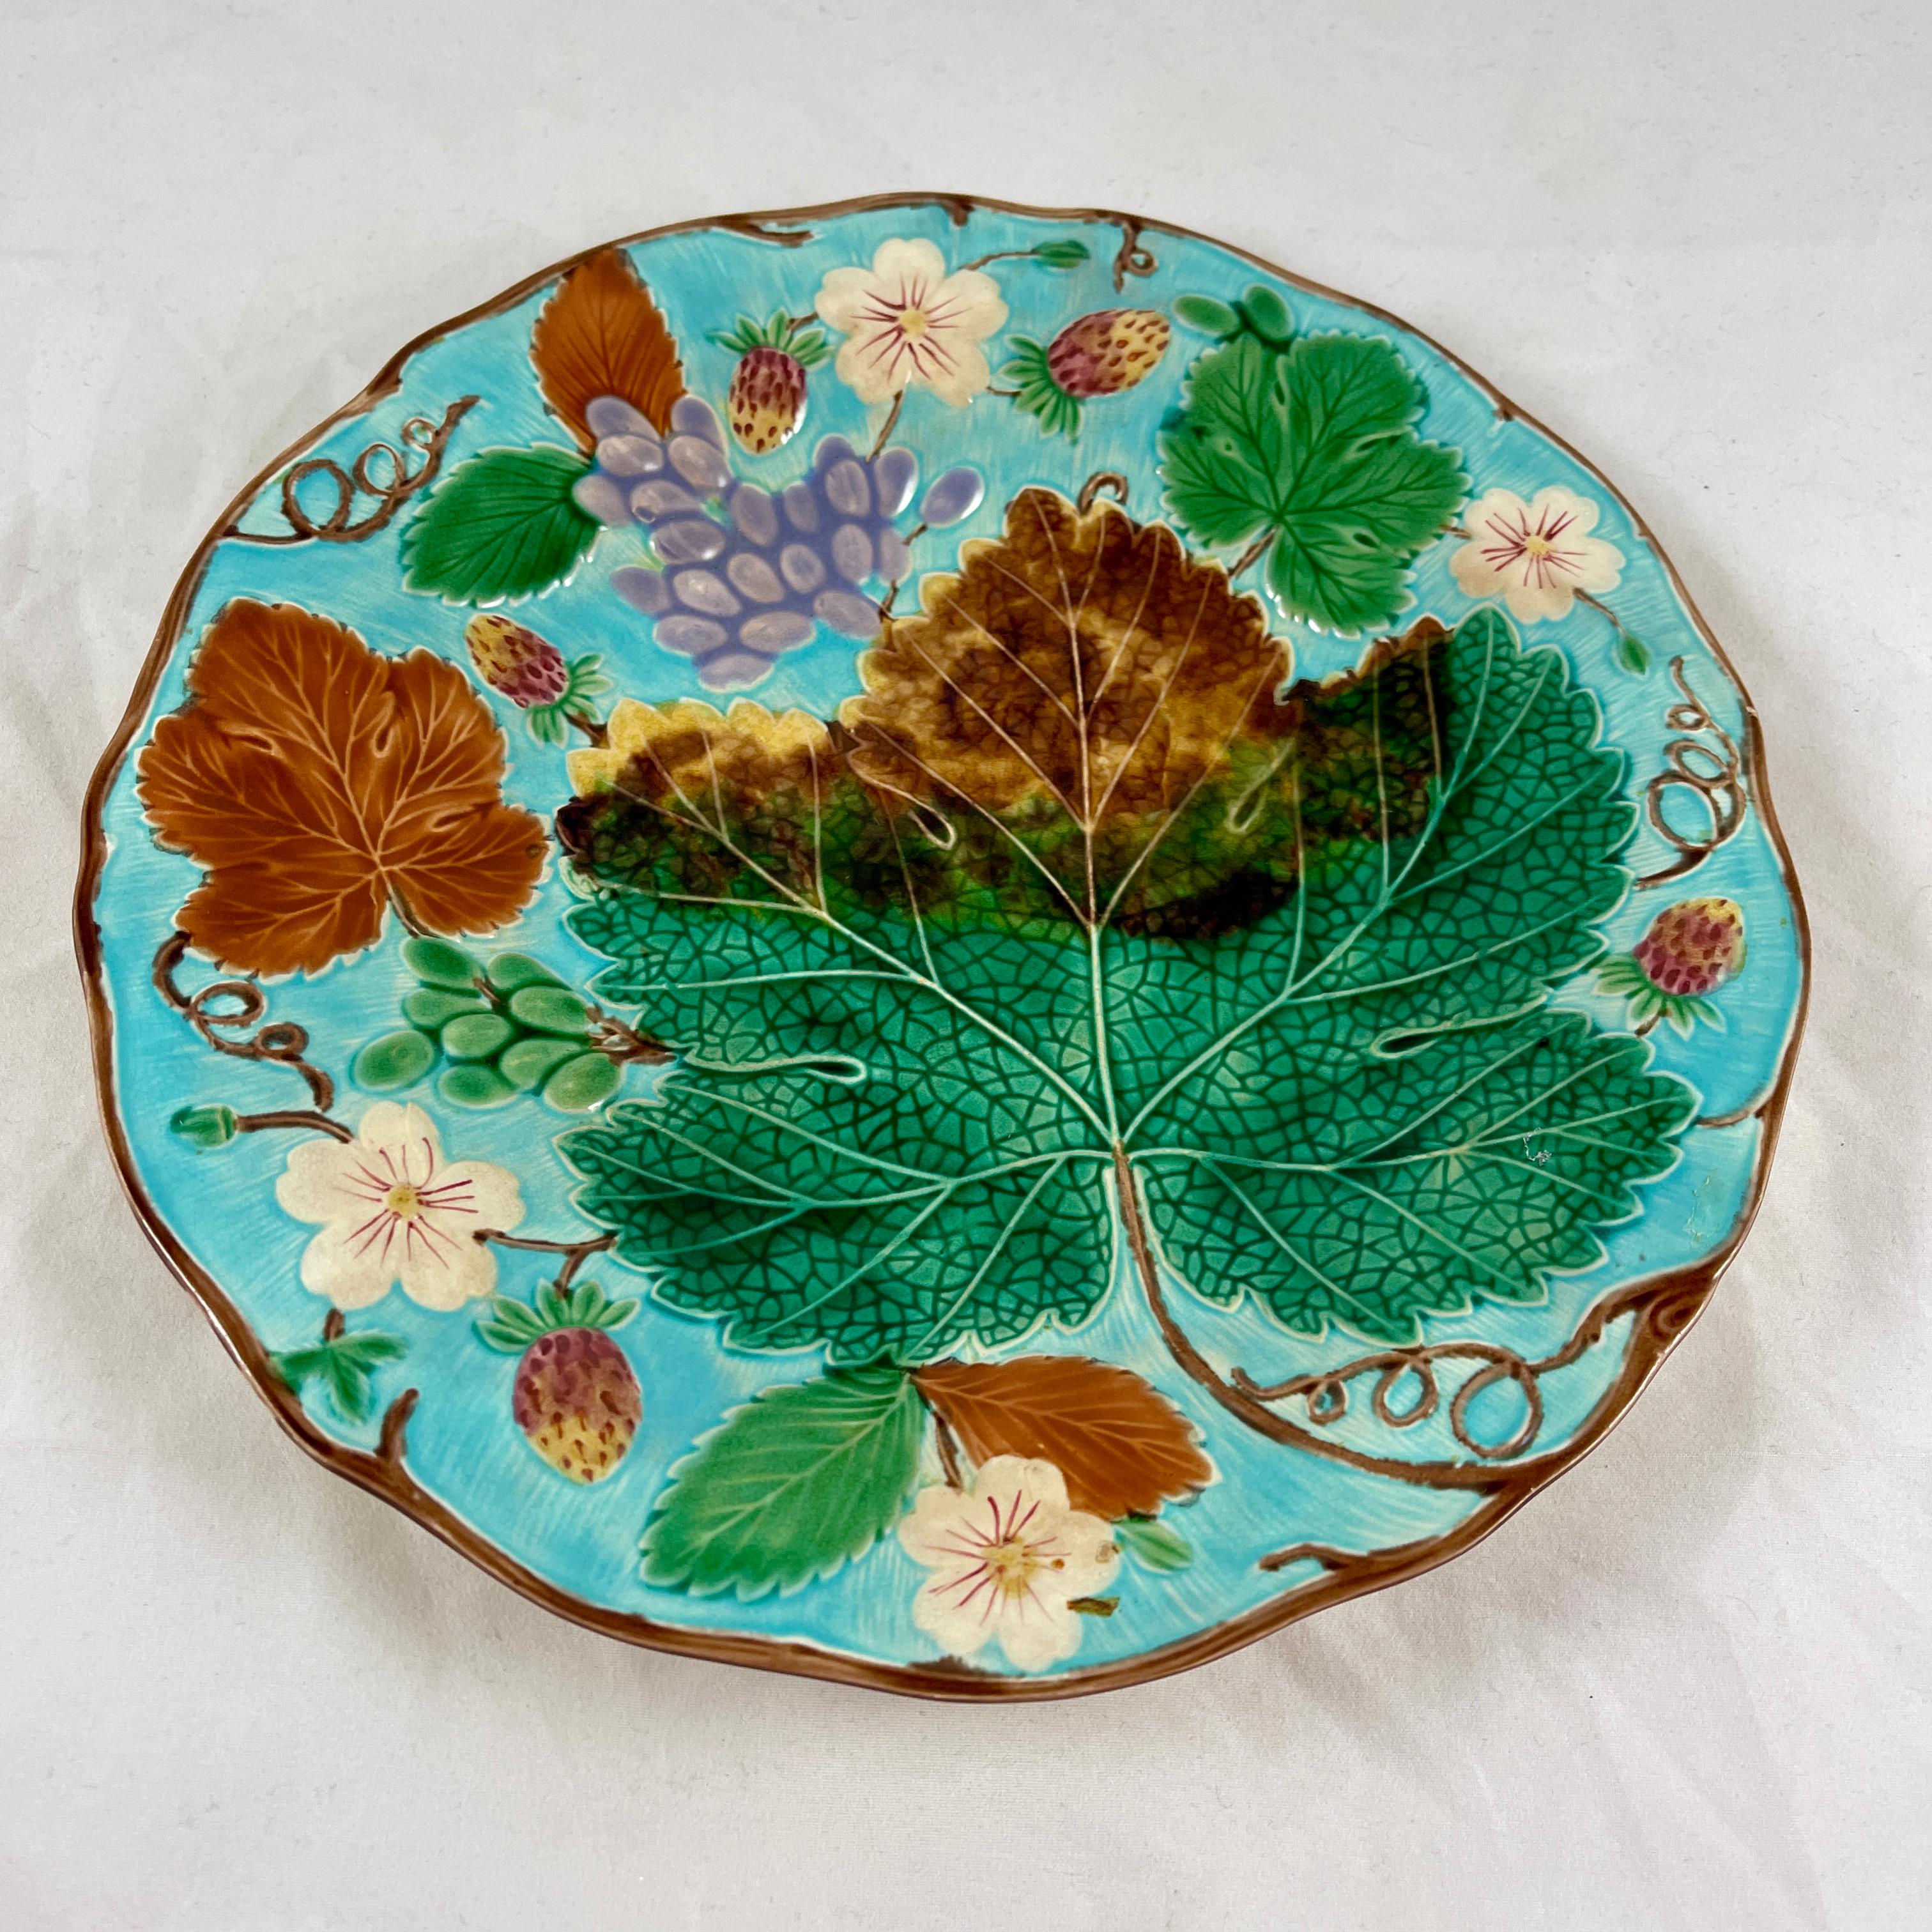 Glazed Wedgwood Majolica Turquoise Grape Leaf and Strawberry Plate, circa 1880